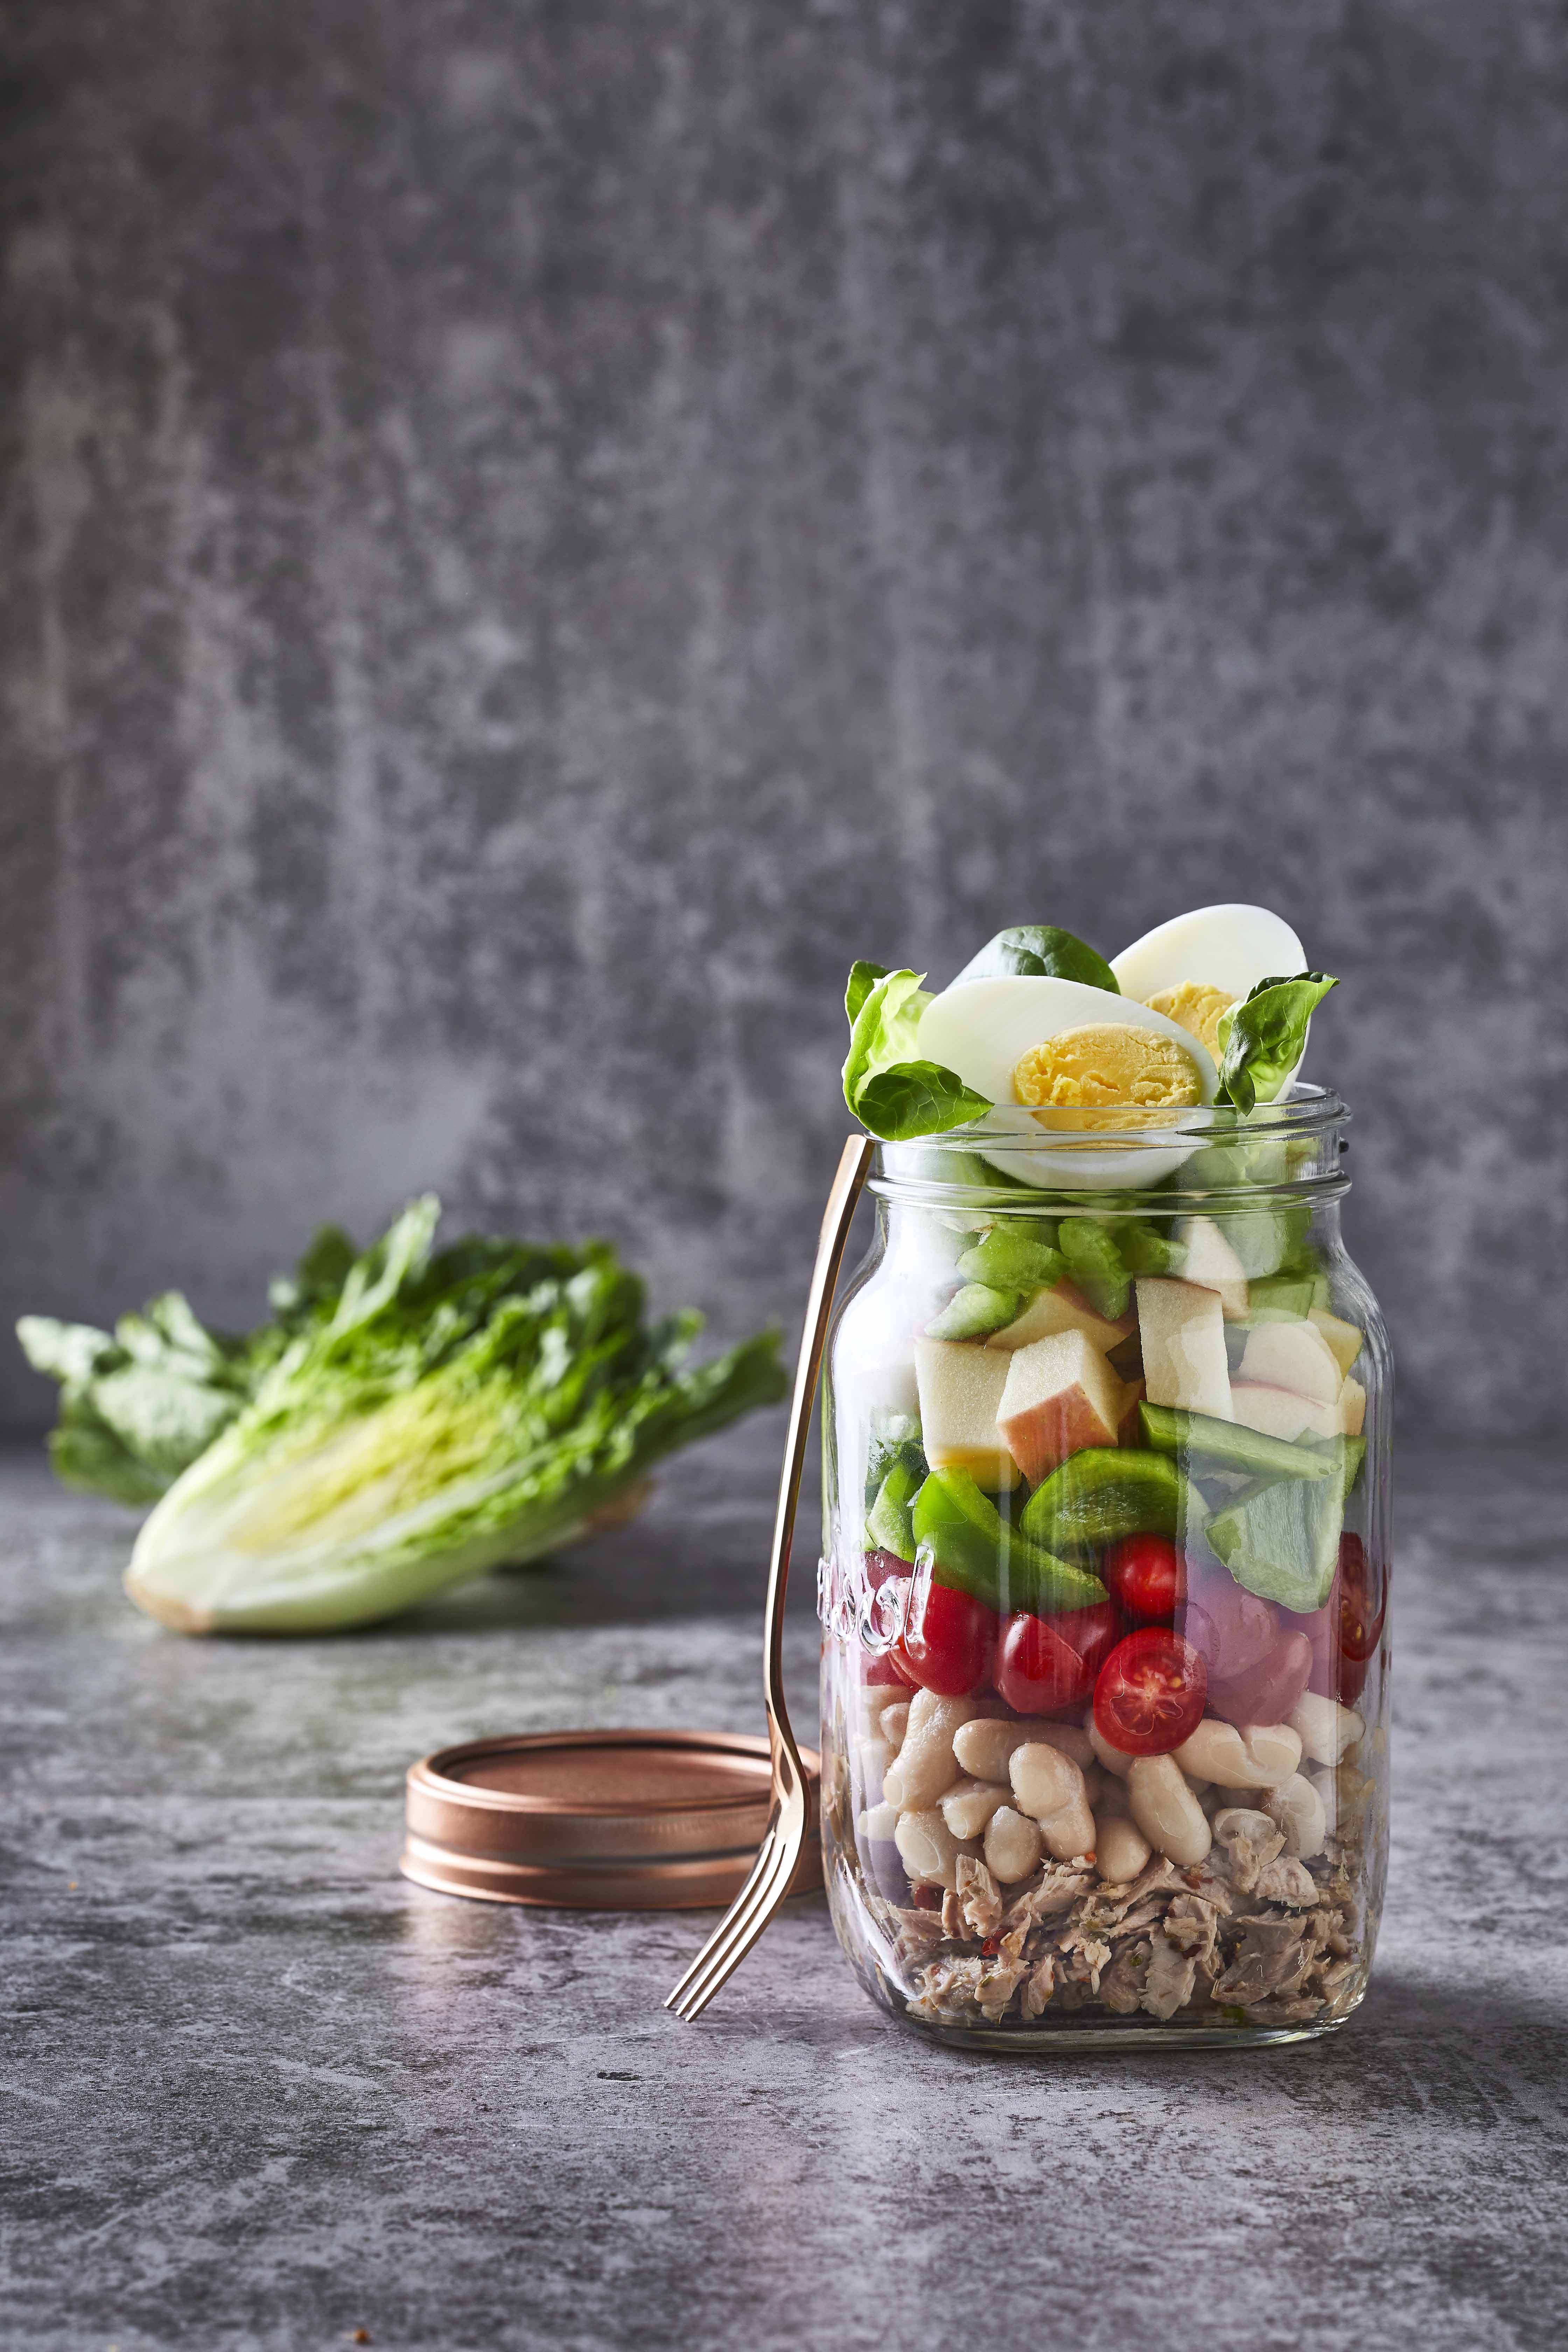 Rozanne Stevens' 'Crunchy cannellini bean & tuna jar salad' recipe ...